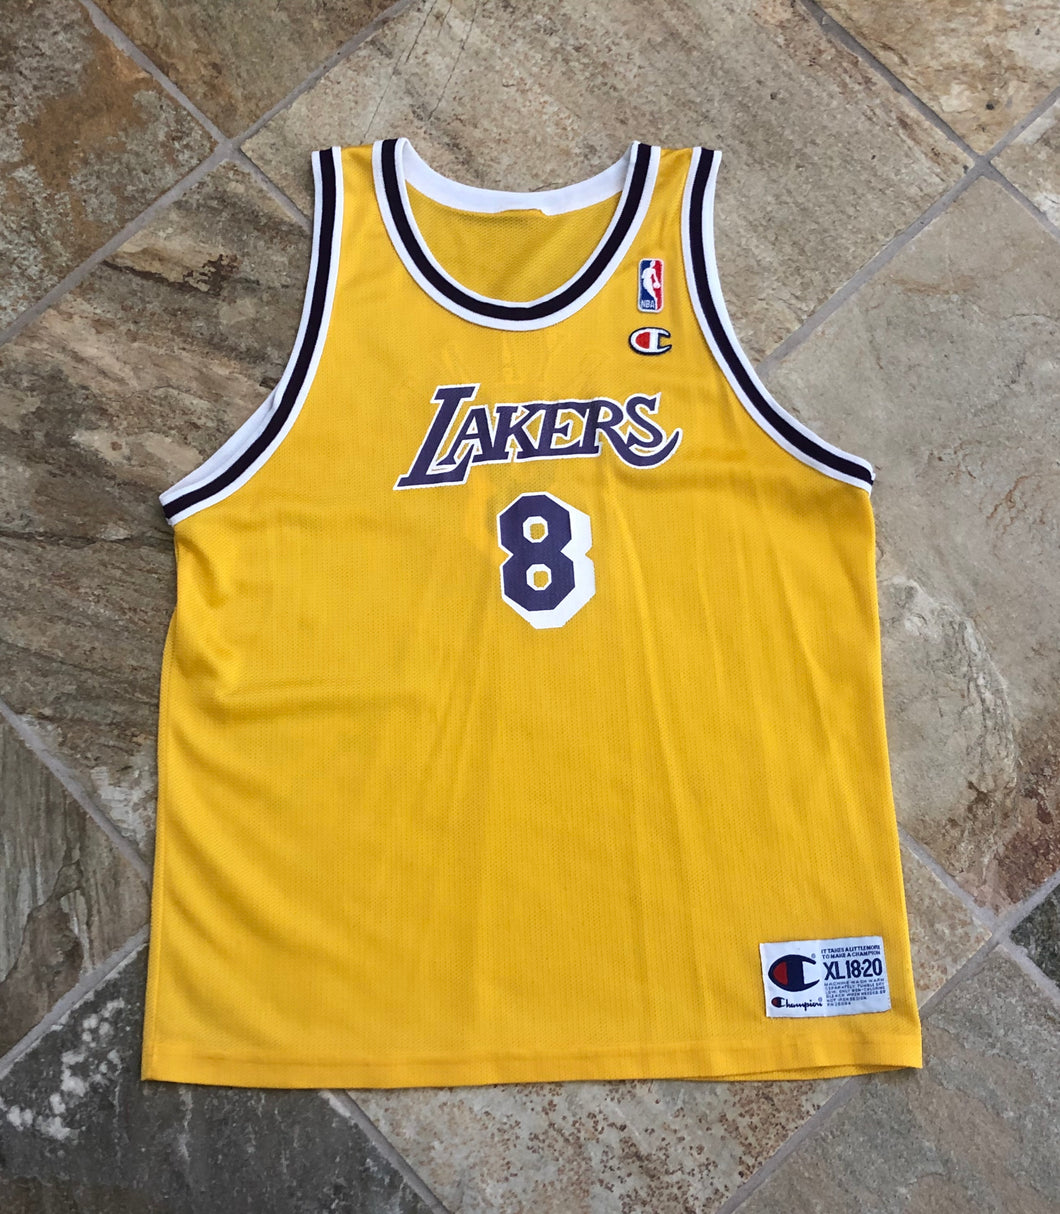 Kids Vintage NBA Champion Kobe Bryant 8 Lakers Jersey Size 